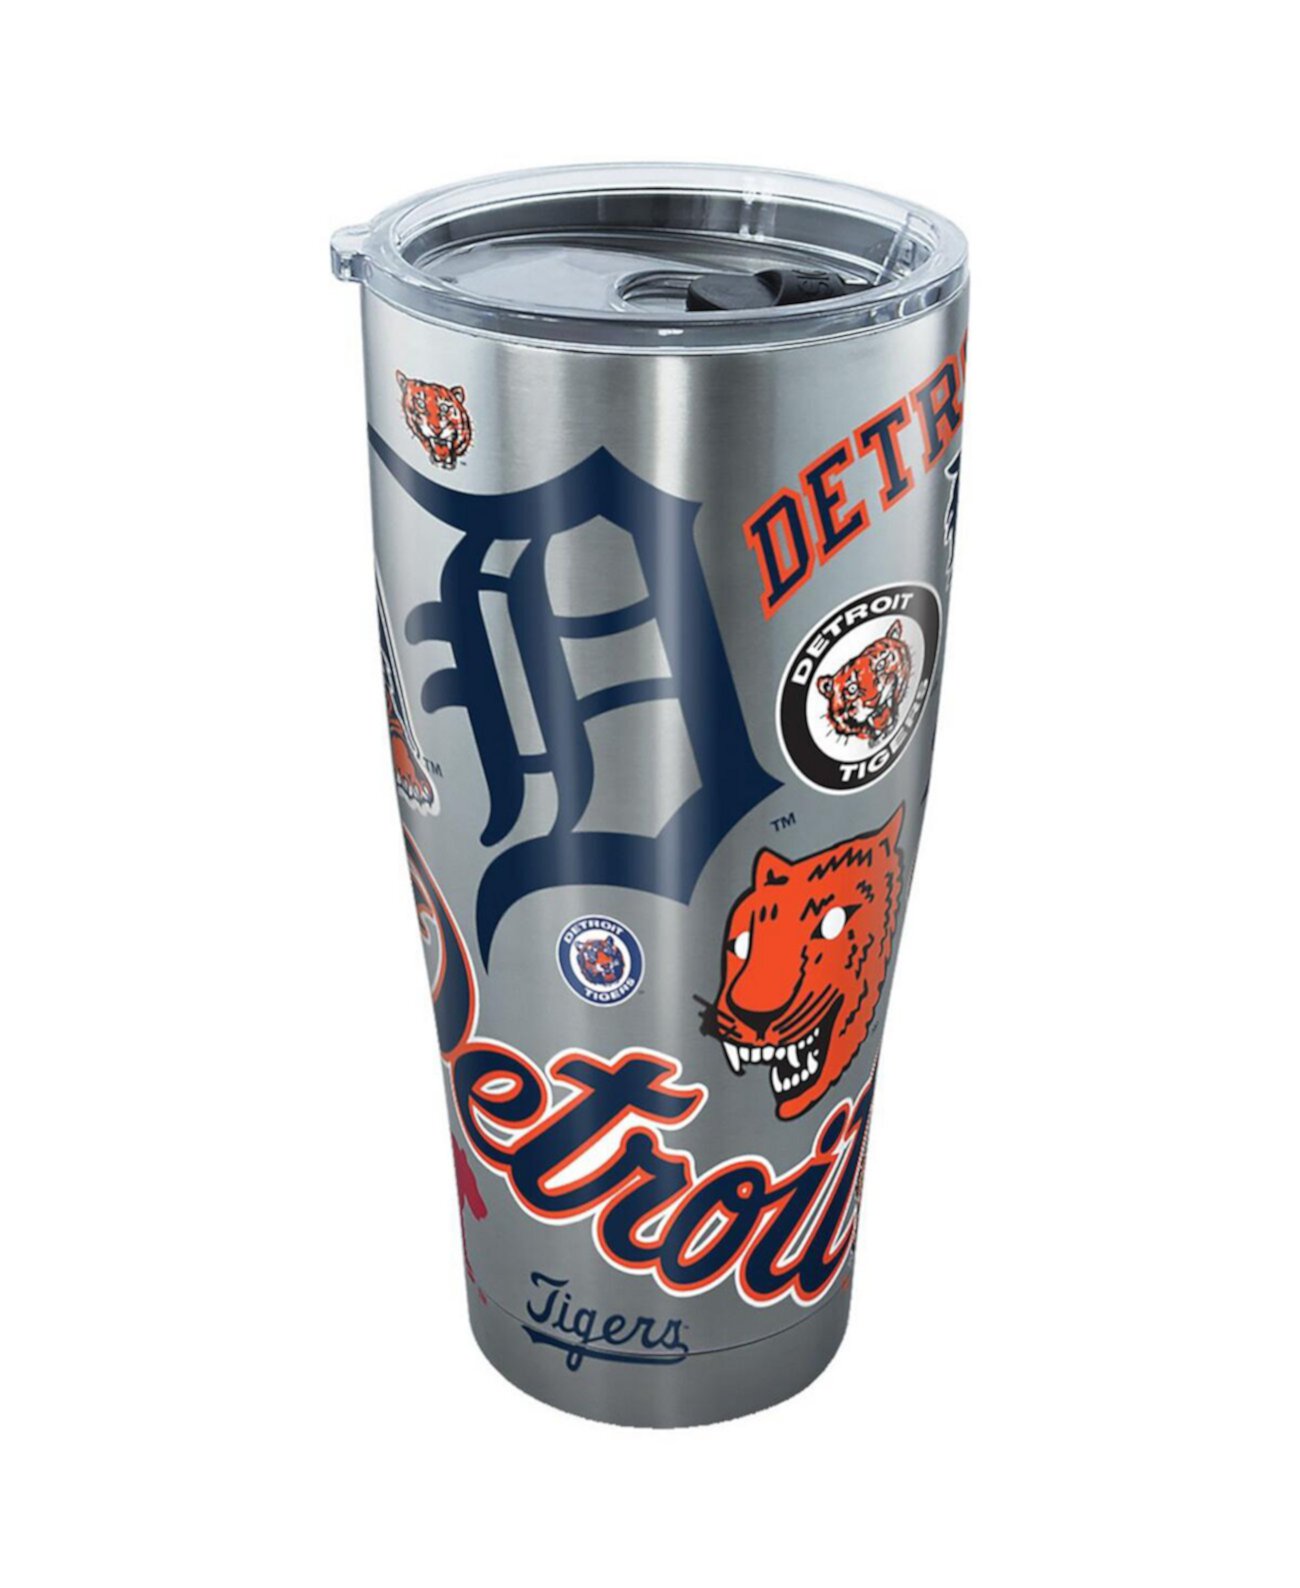 Дорожный стакан Detroit Tigers на 20 унций Tervis